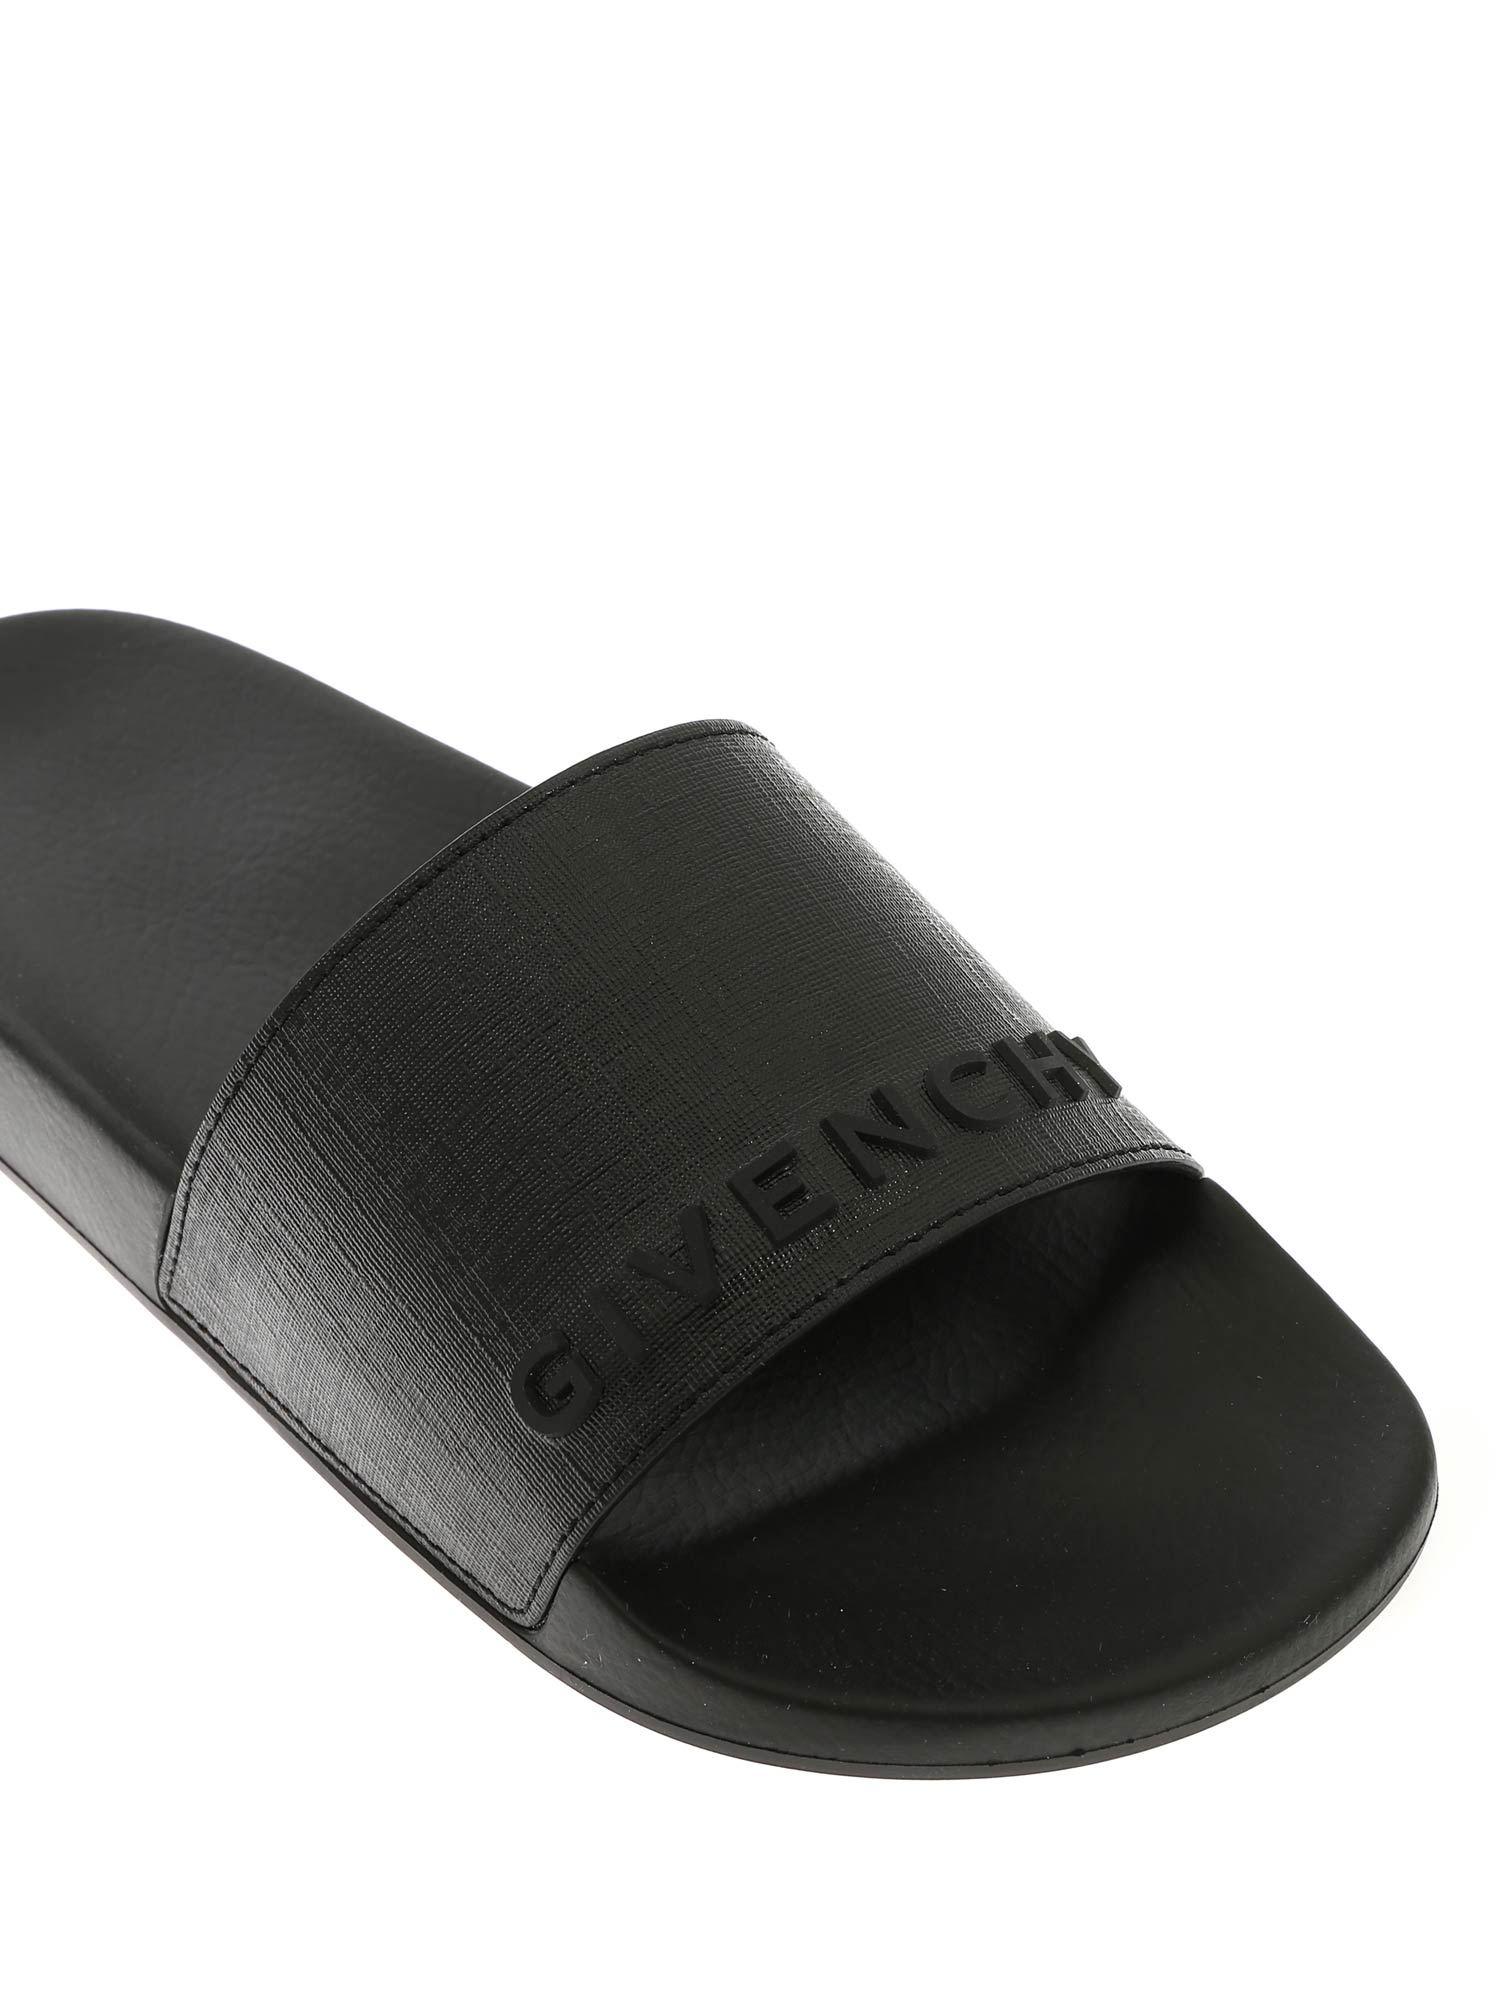 Givenchy Rubber Black Slides With 3d Logo for Men - Lyst